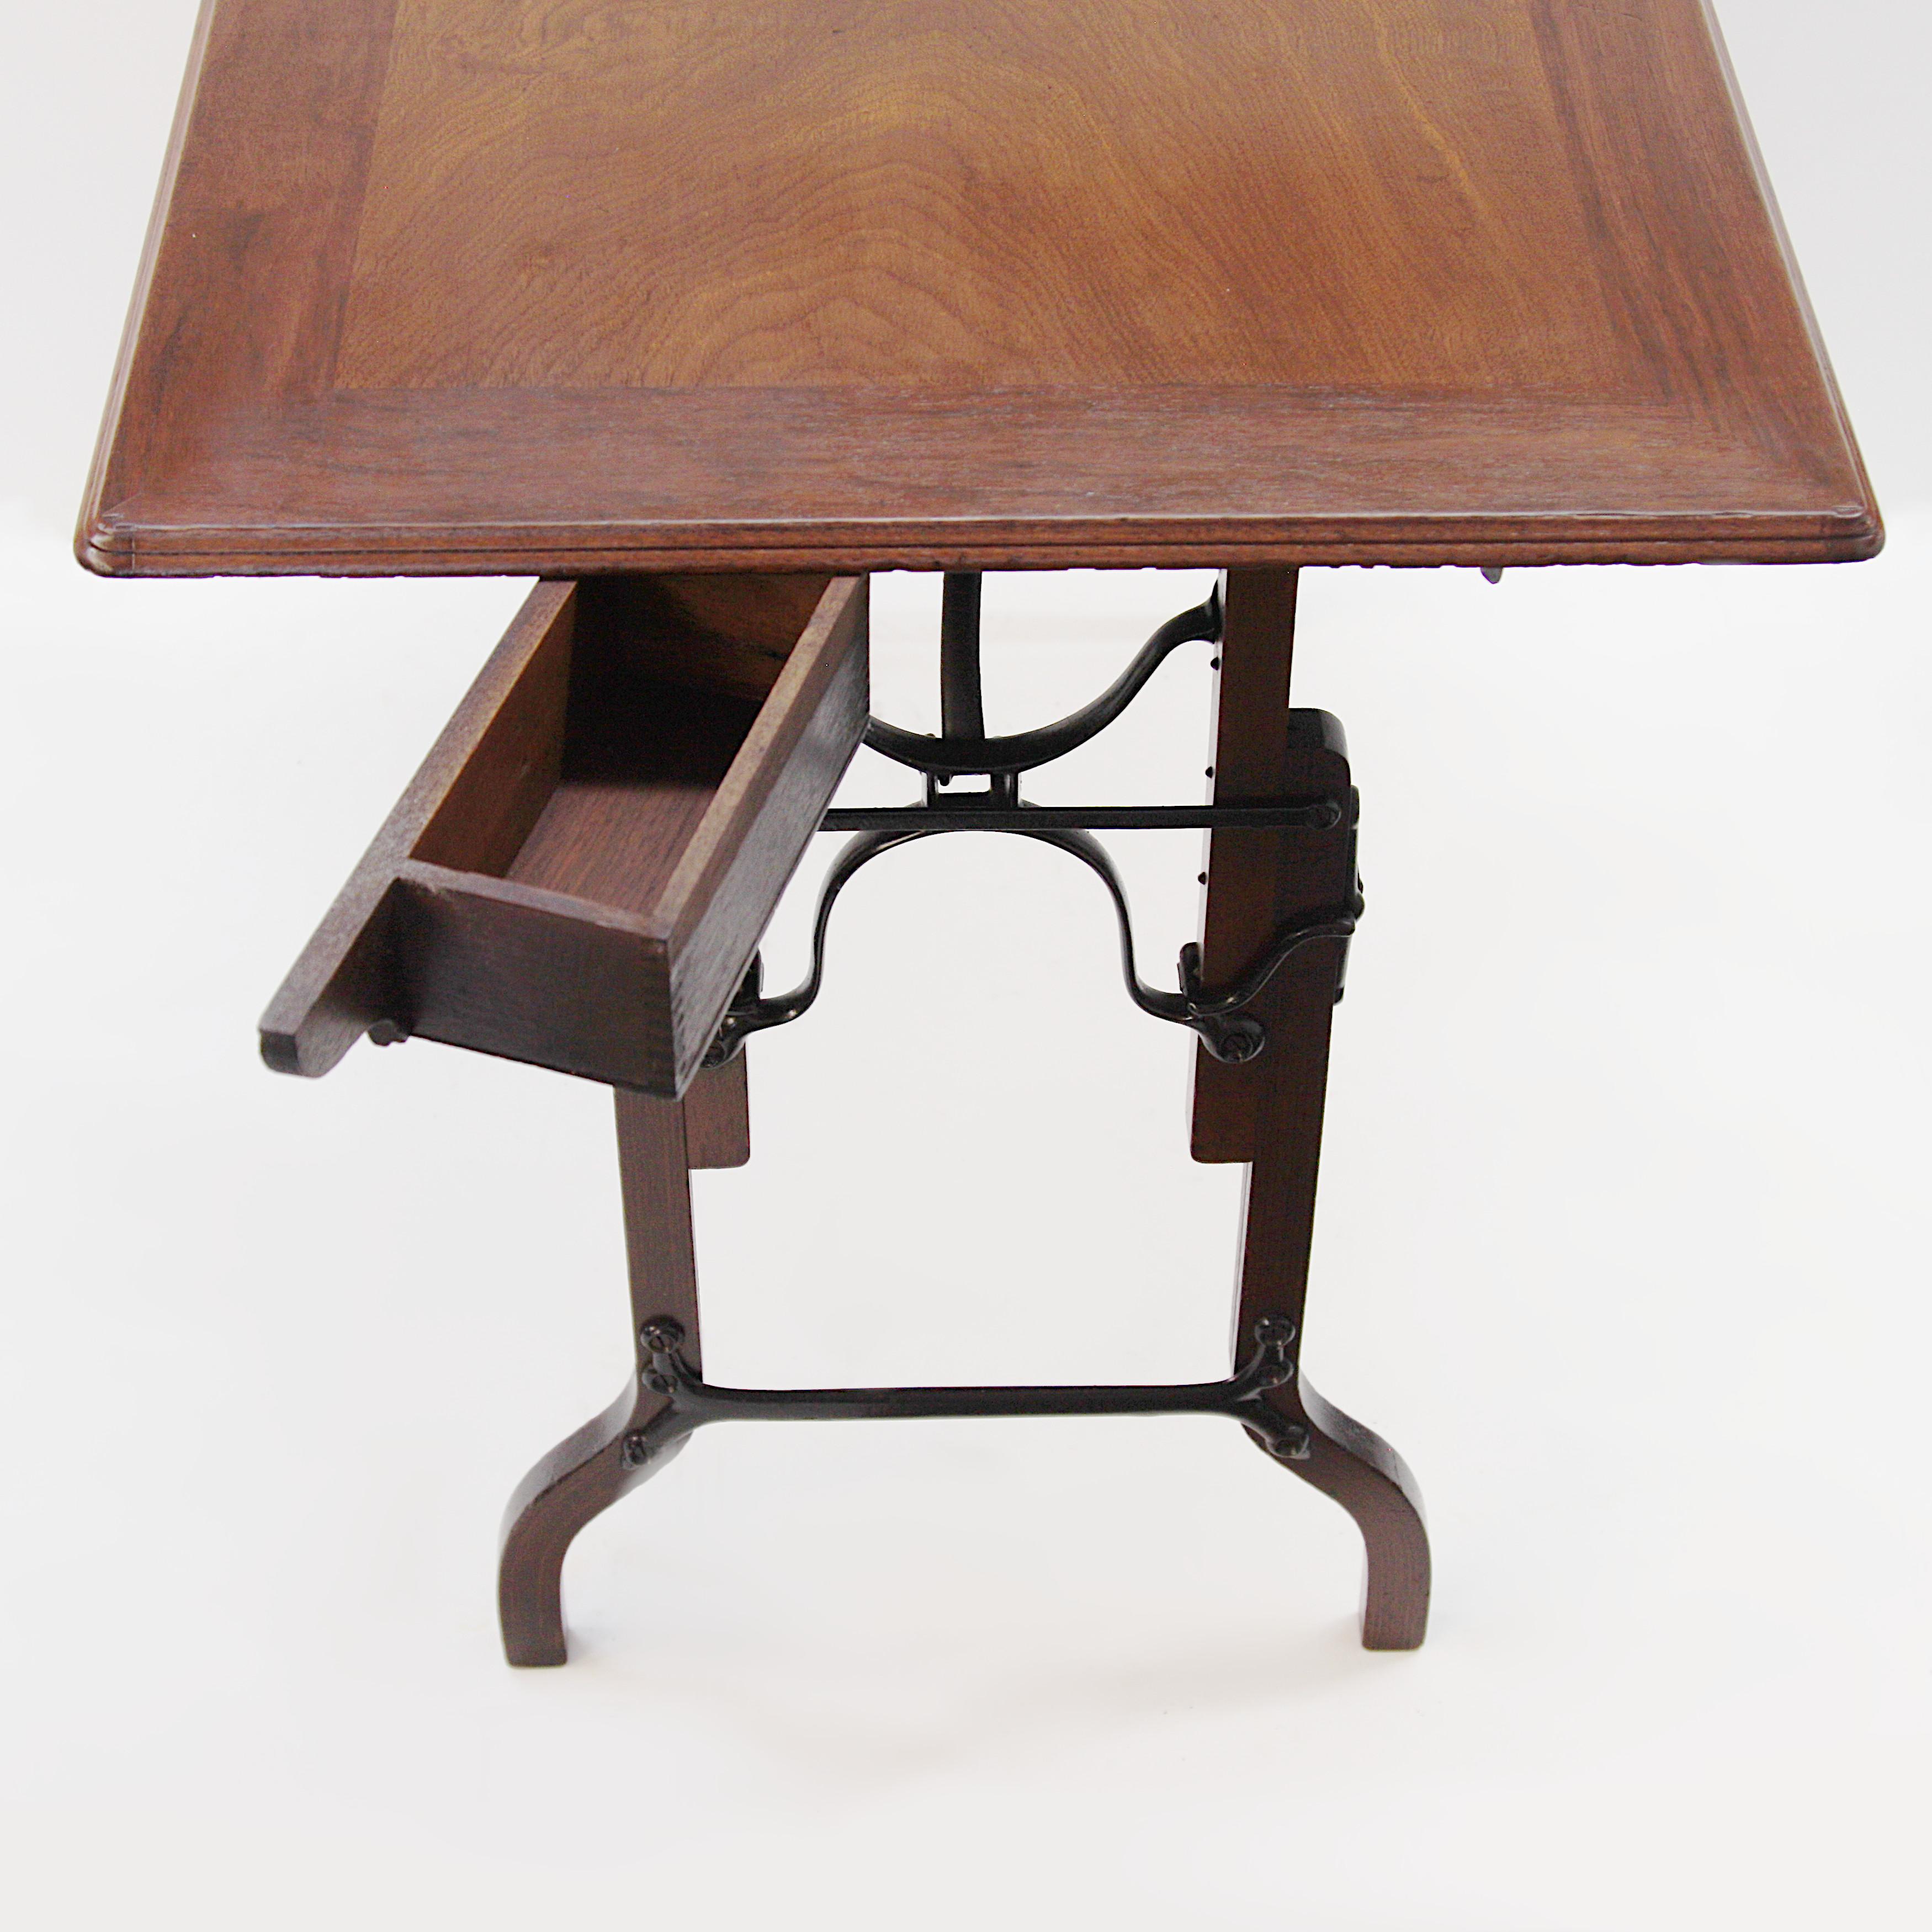 Cast Rare 1870's Vintage Industrial Utility Adjustable Table Desk by Lambie & Sargent